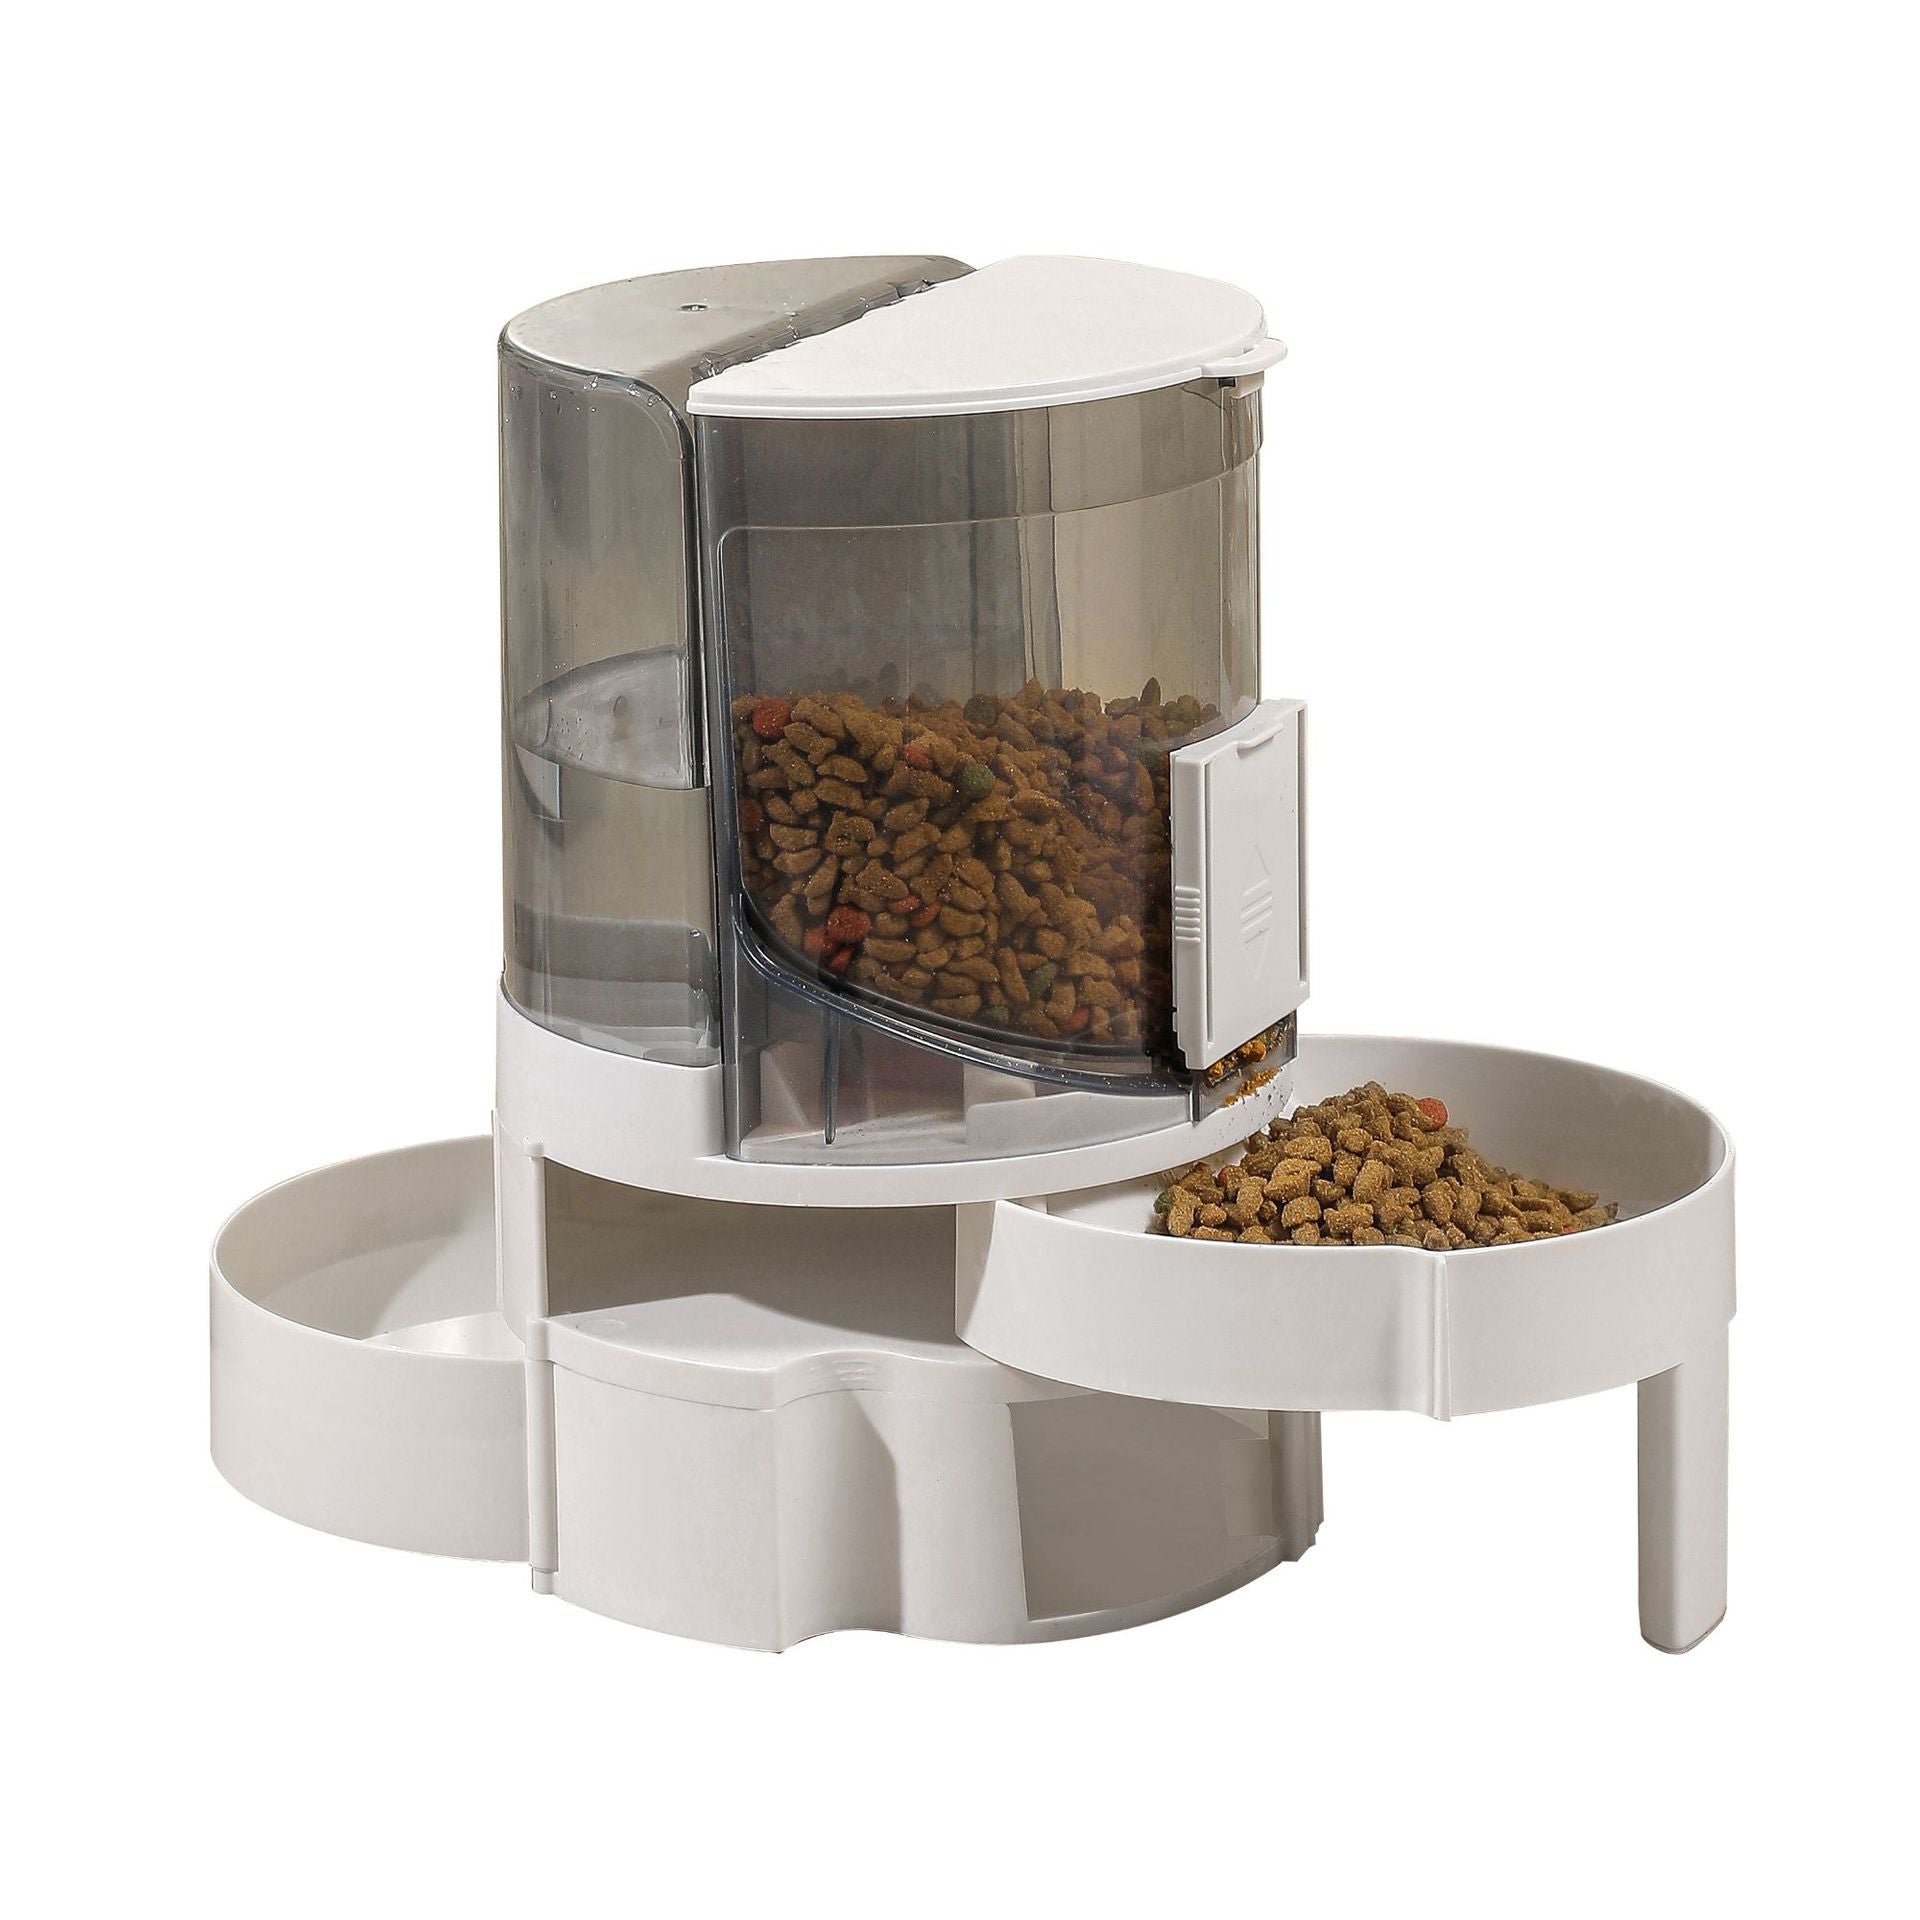 Pet Feeder -Automatic Water Change Pet feeder